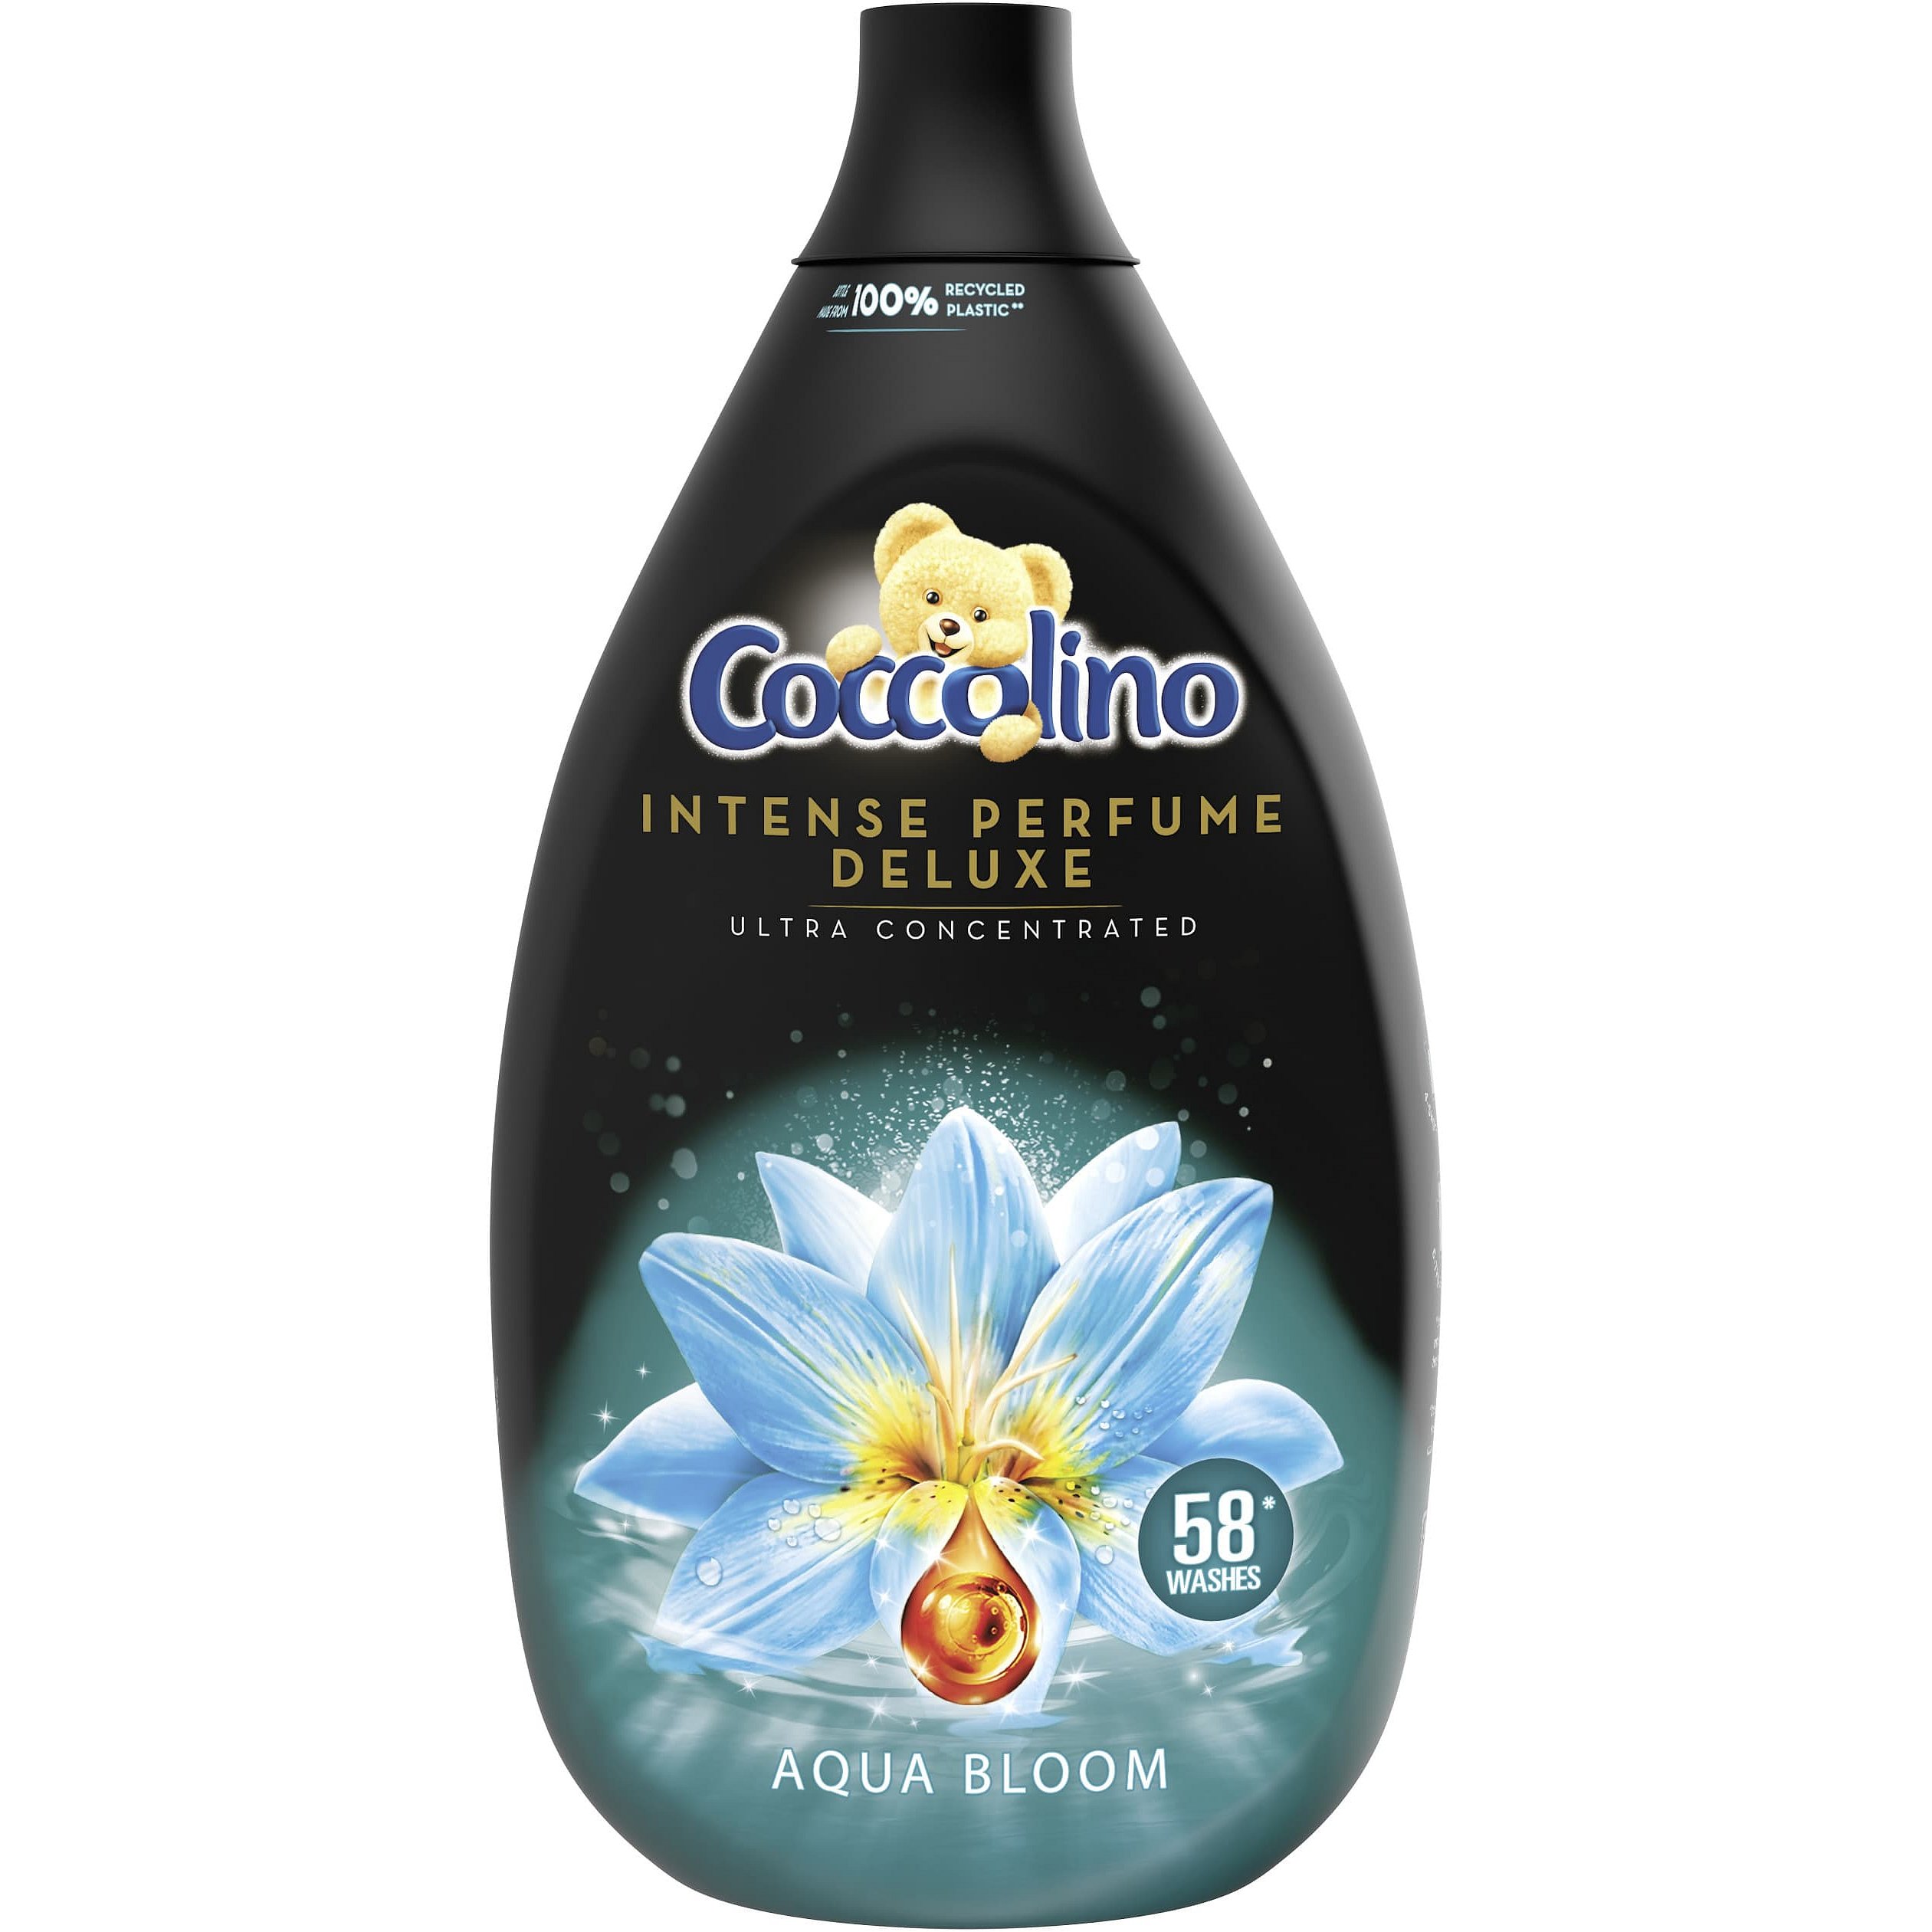 Coccolino aviváž Perfume Deluxe Aqua Bloom (58 pracích dávek) 870ml